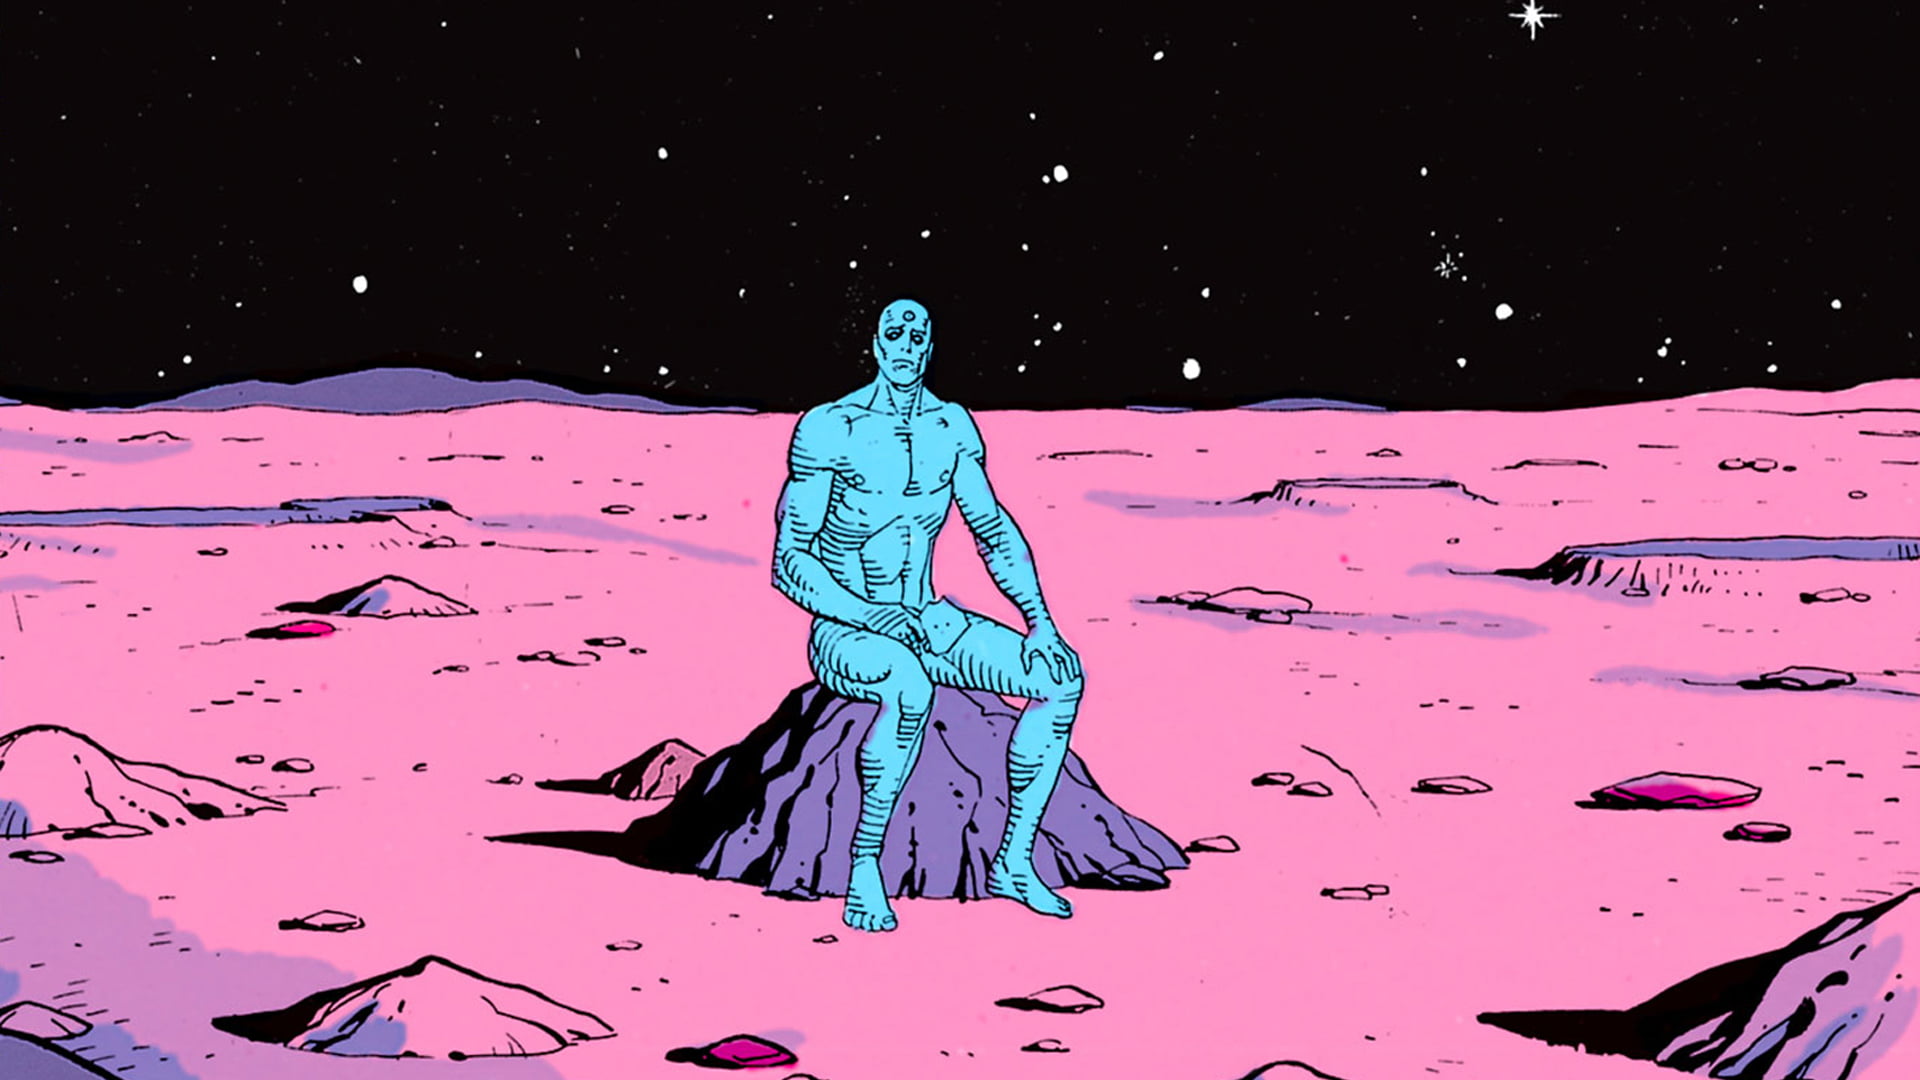 man sitting on rock illustration, Dr. Manhattan, graphic novels, Watchmen